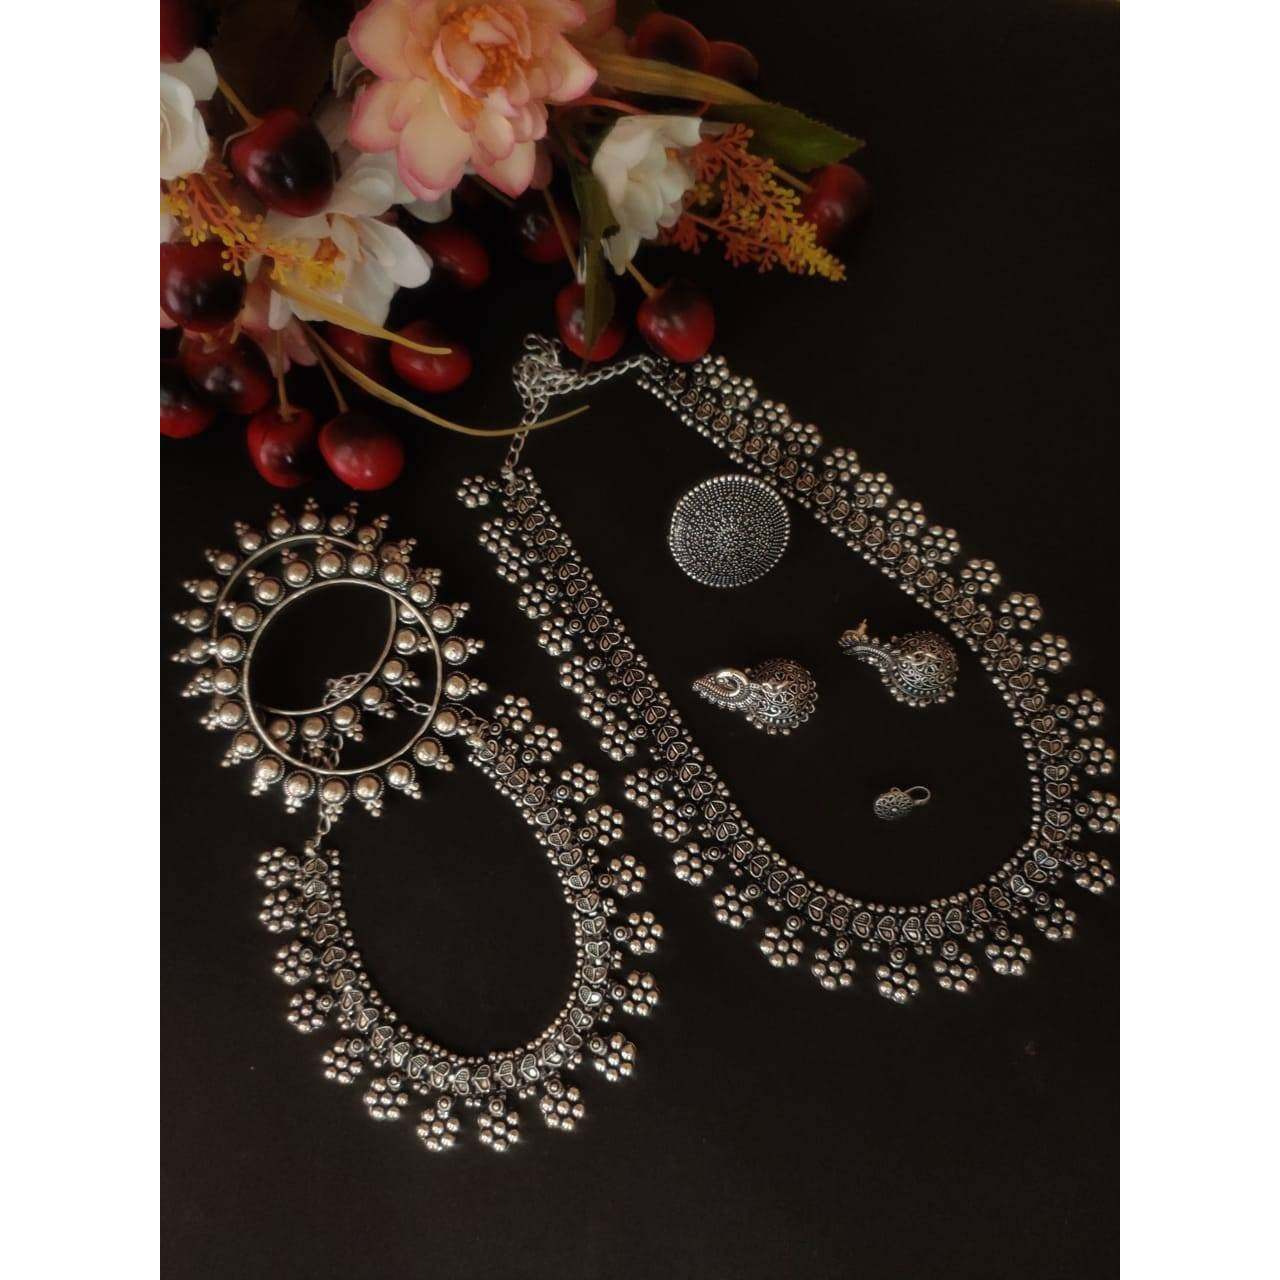 Oxidized German Silver Long Necklace Set of 6 | Indian Ethnic Oxidized Silver Black Temple Jewelry | Kolhapuri Boho Tribal Necklace